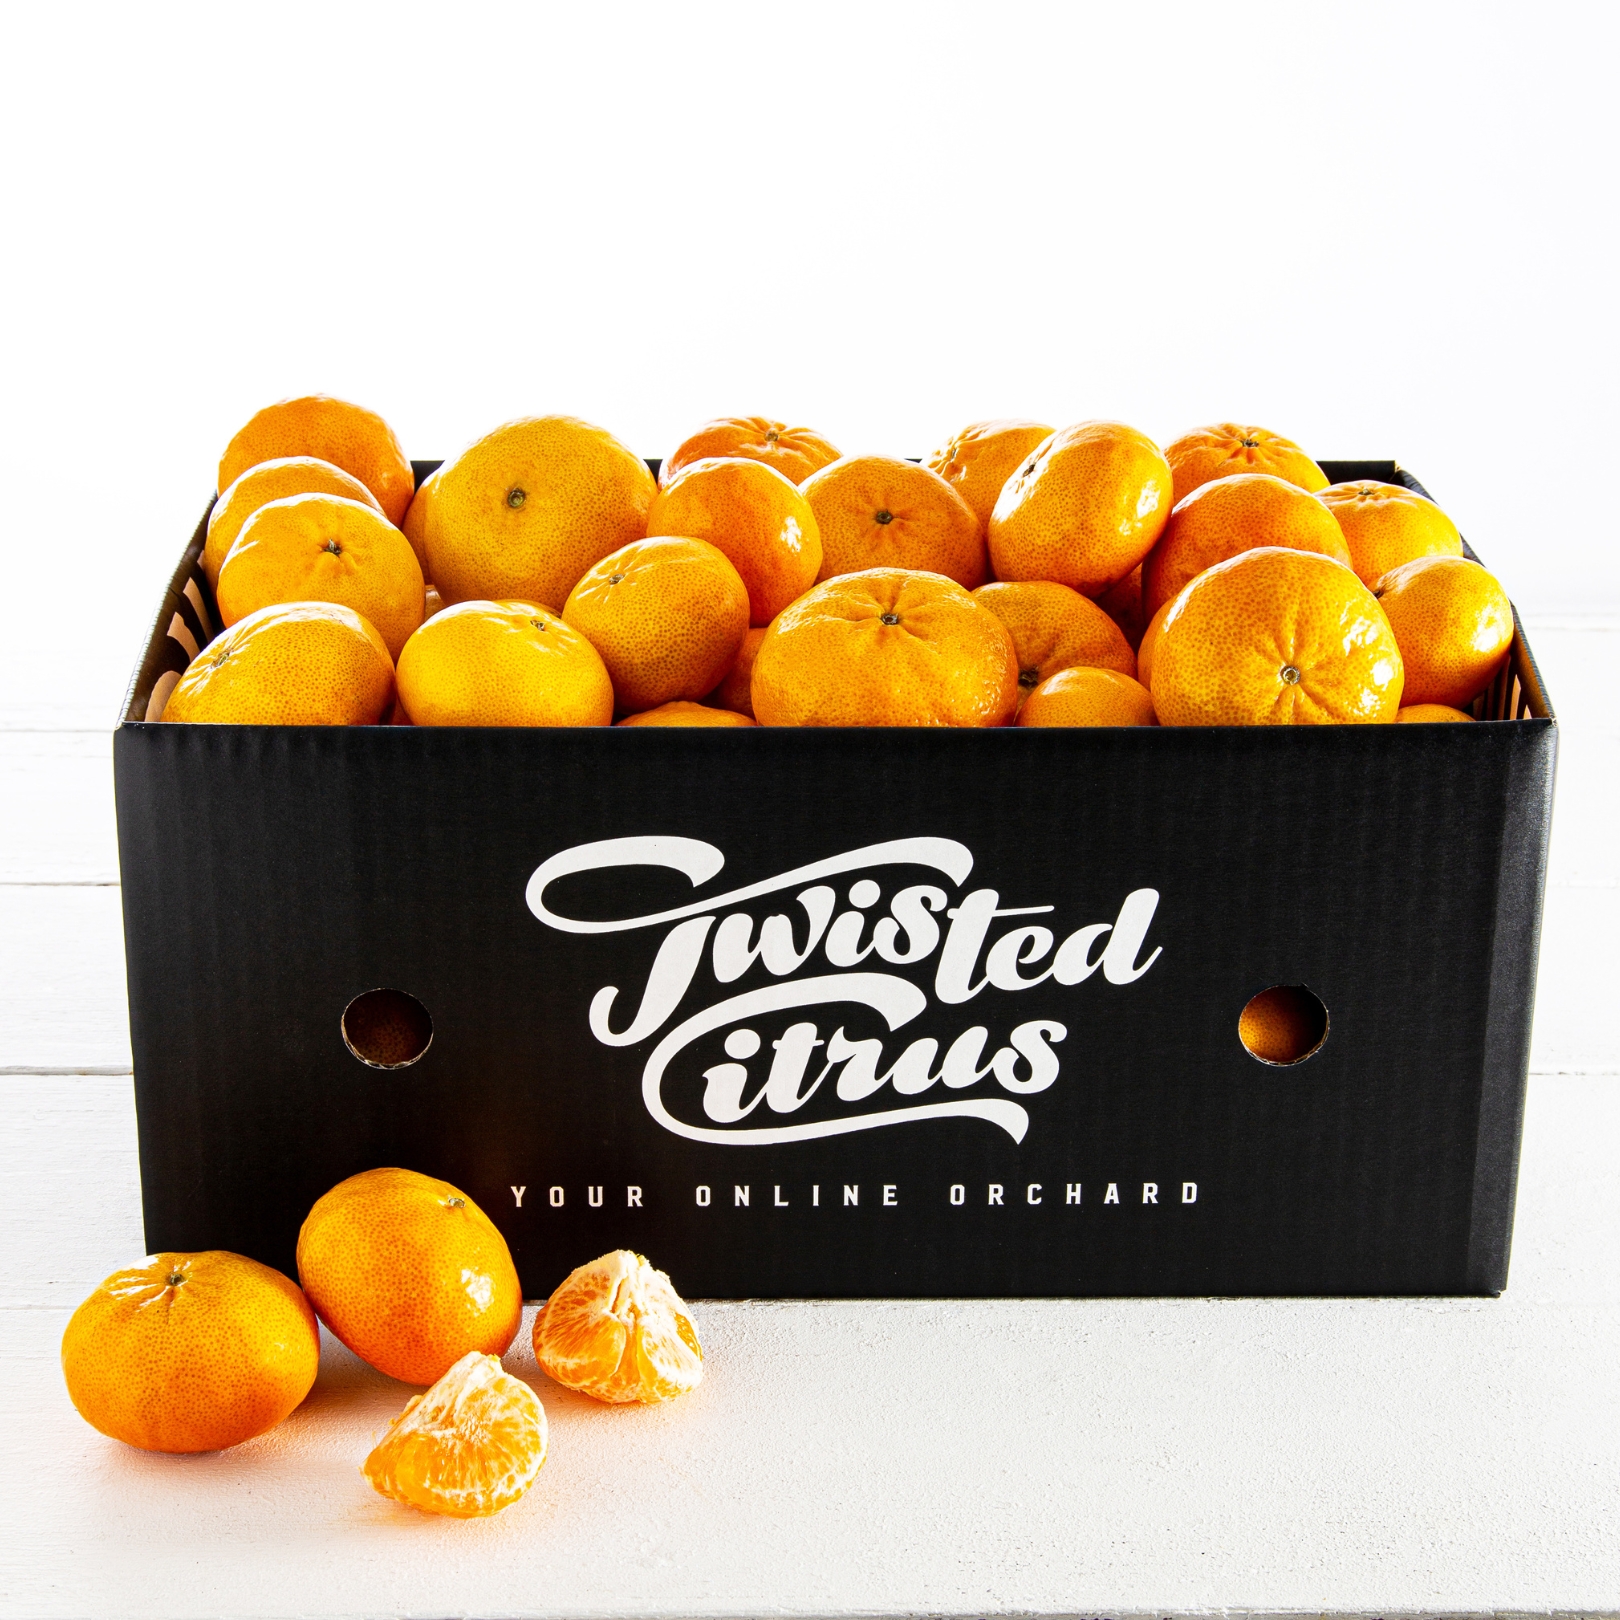 Buy Mandarins - Clementine Online NZ - Twisted Citrus